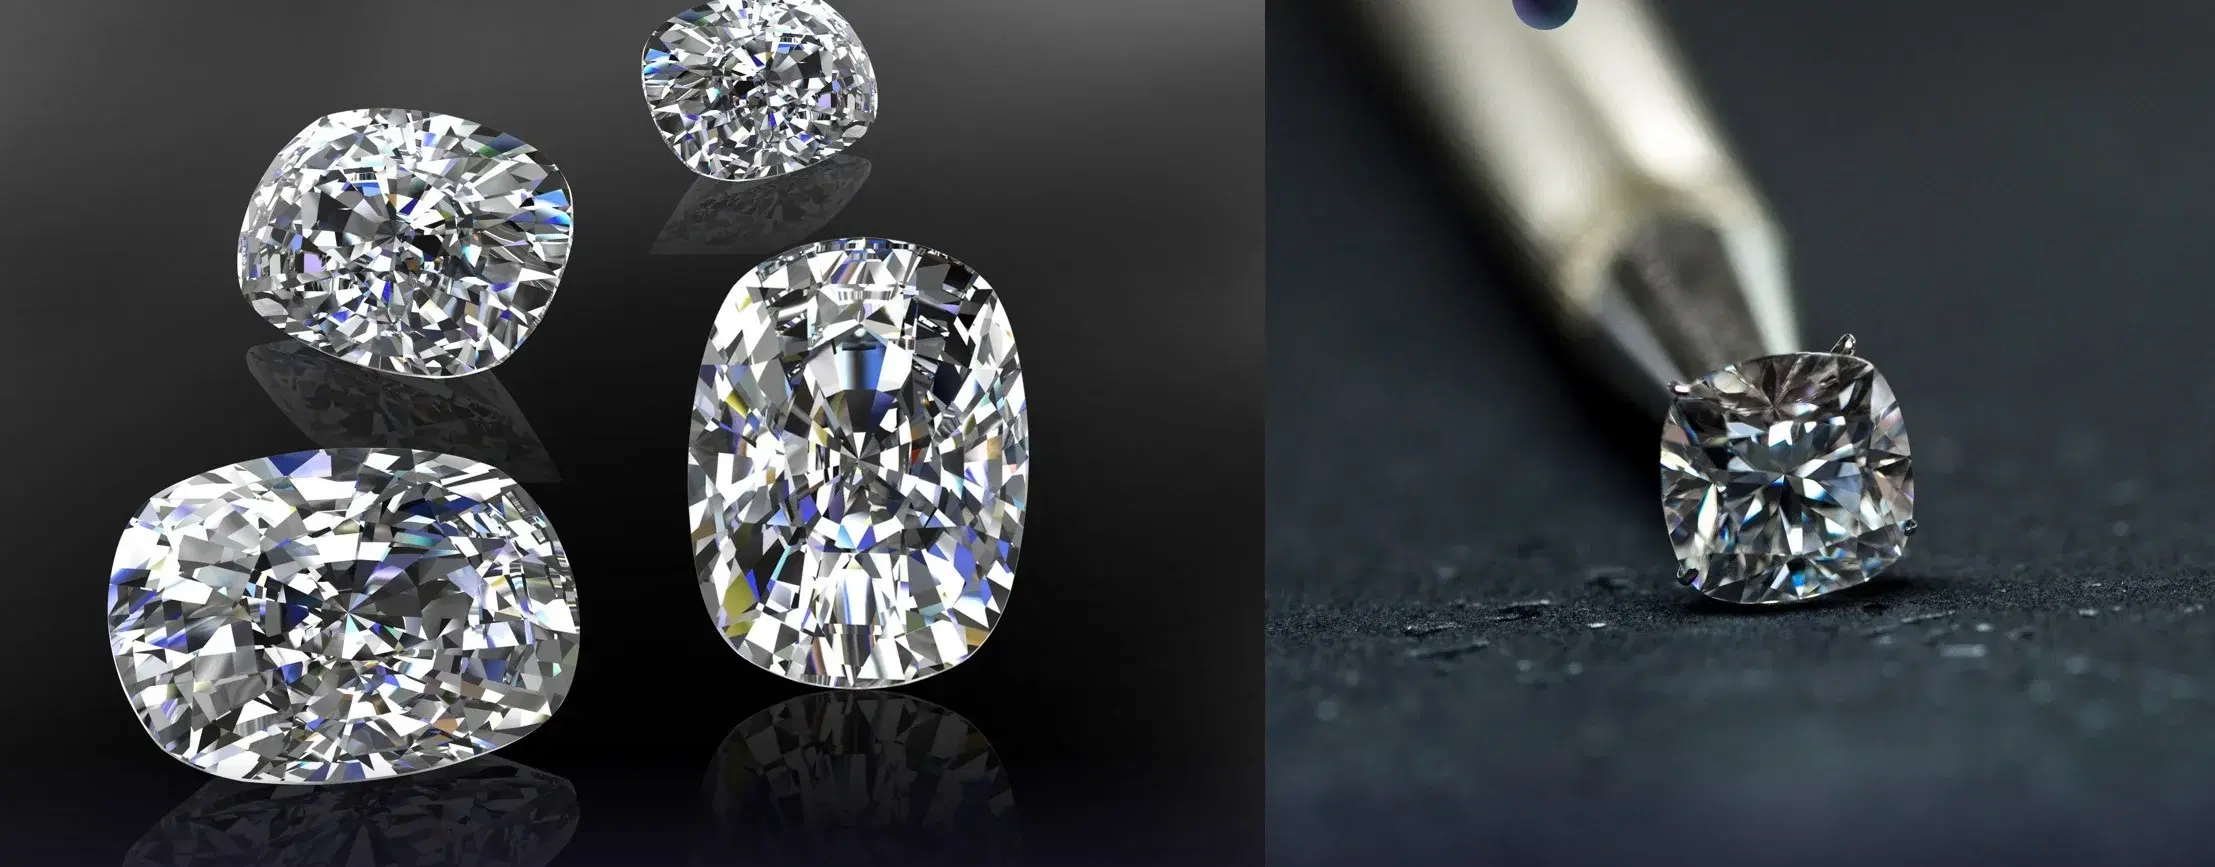 Loose Wholesale Diamonds: How to Buy?